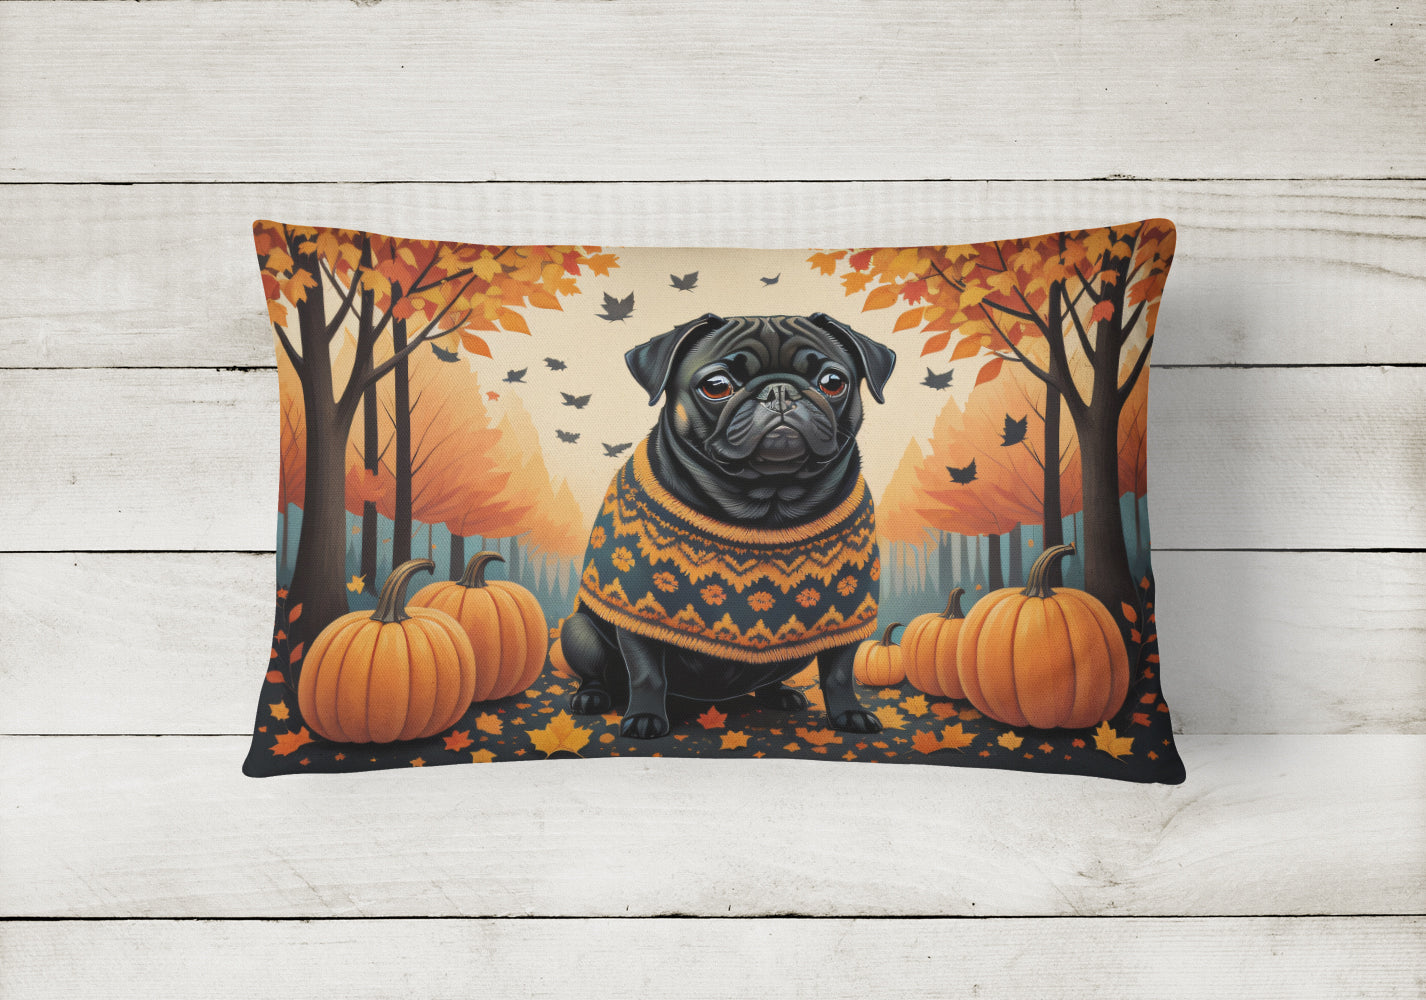 Buy this Black Pug Fall Fabric Decorative Pillow